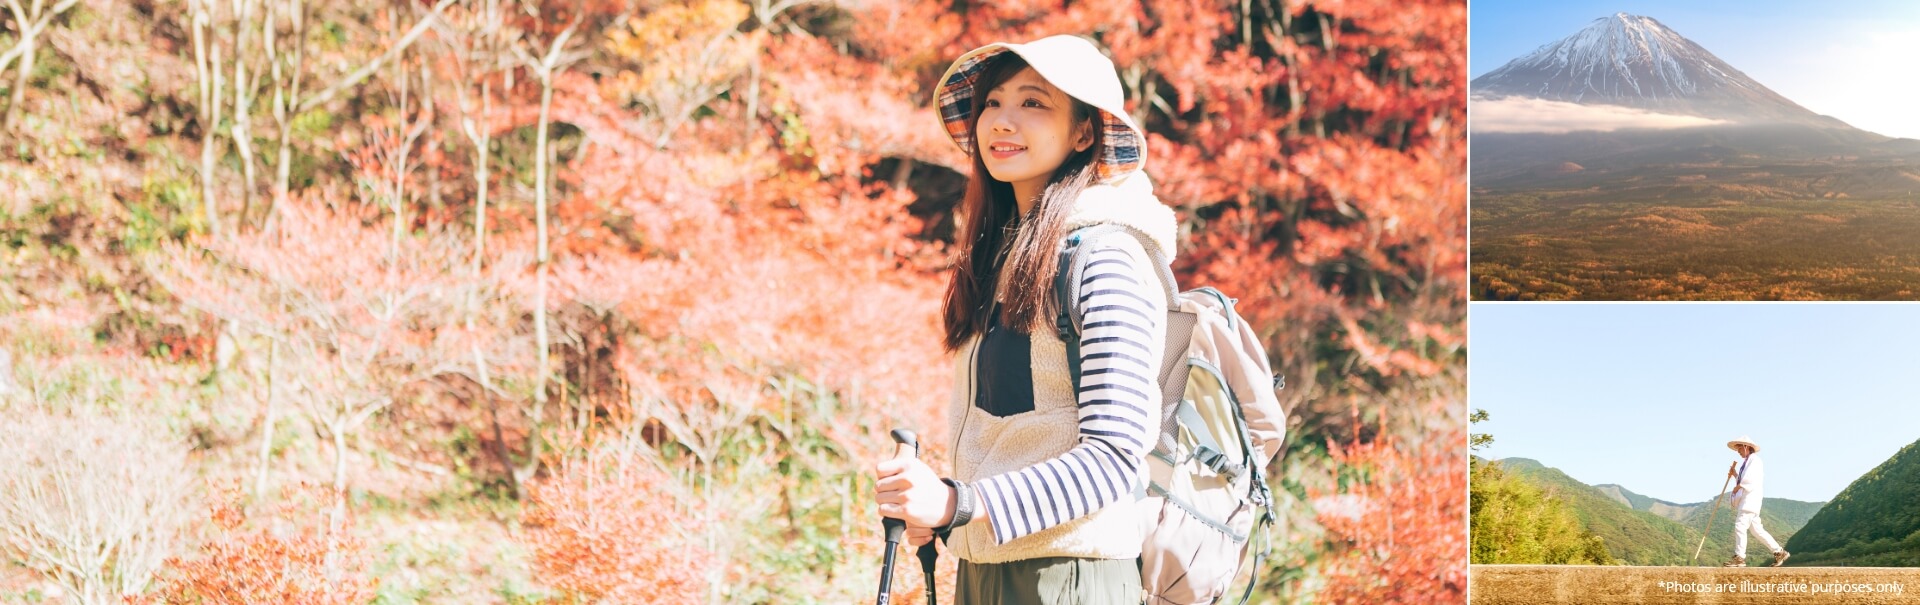 1-Day Mt. Fuji Autumn Trekking & Hiking Tour